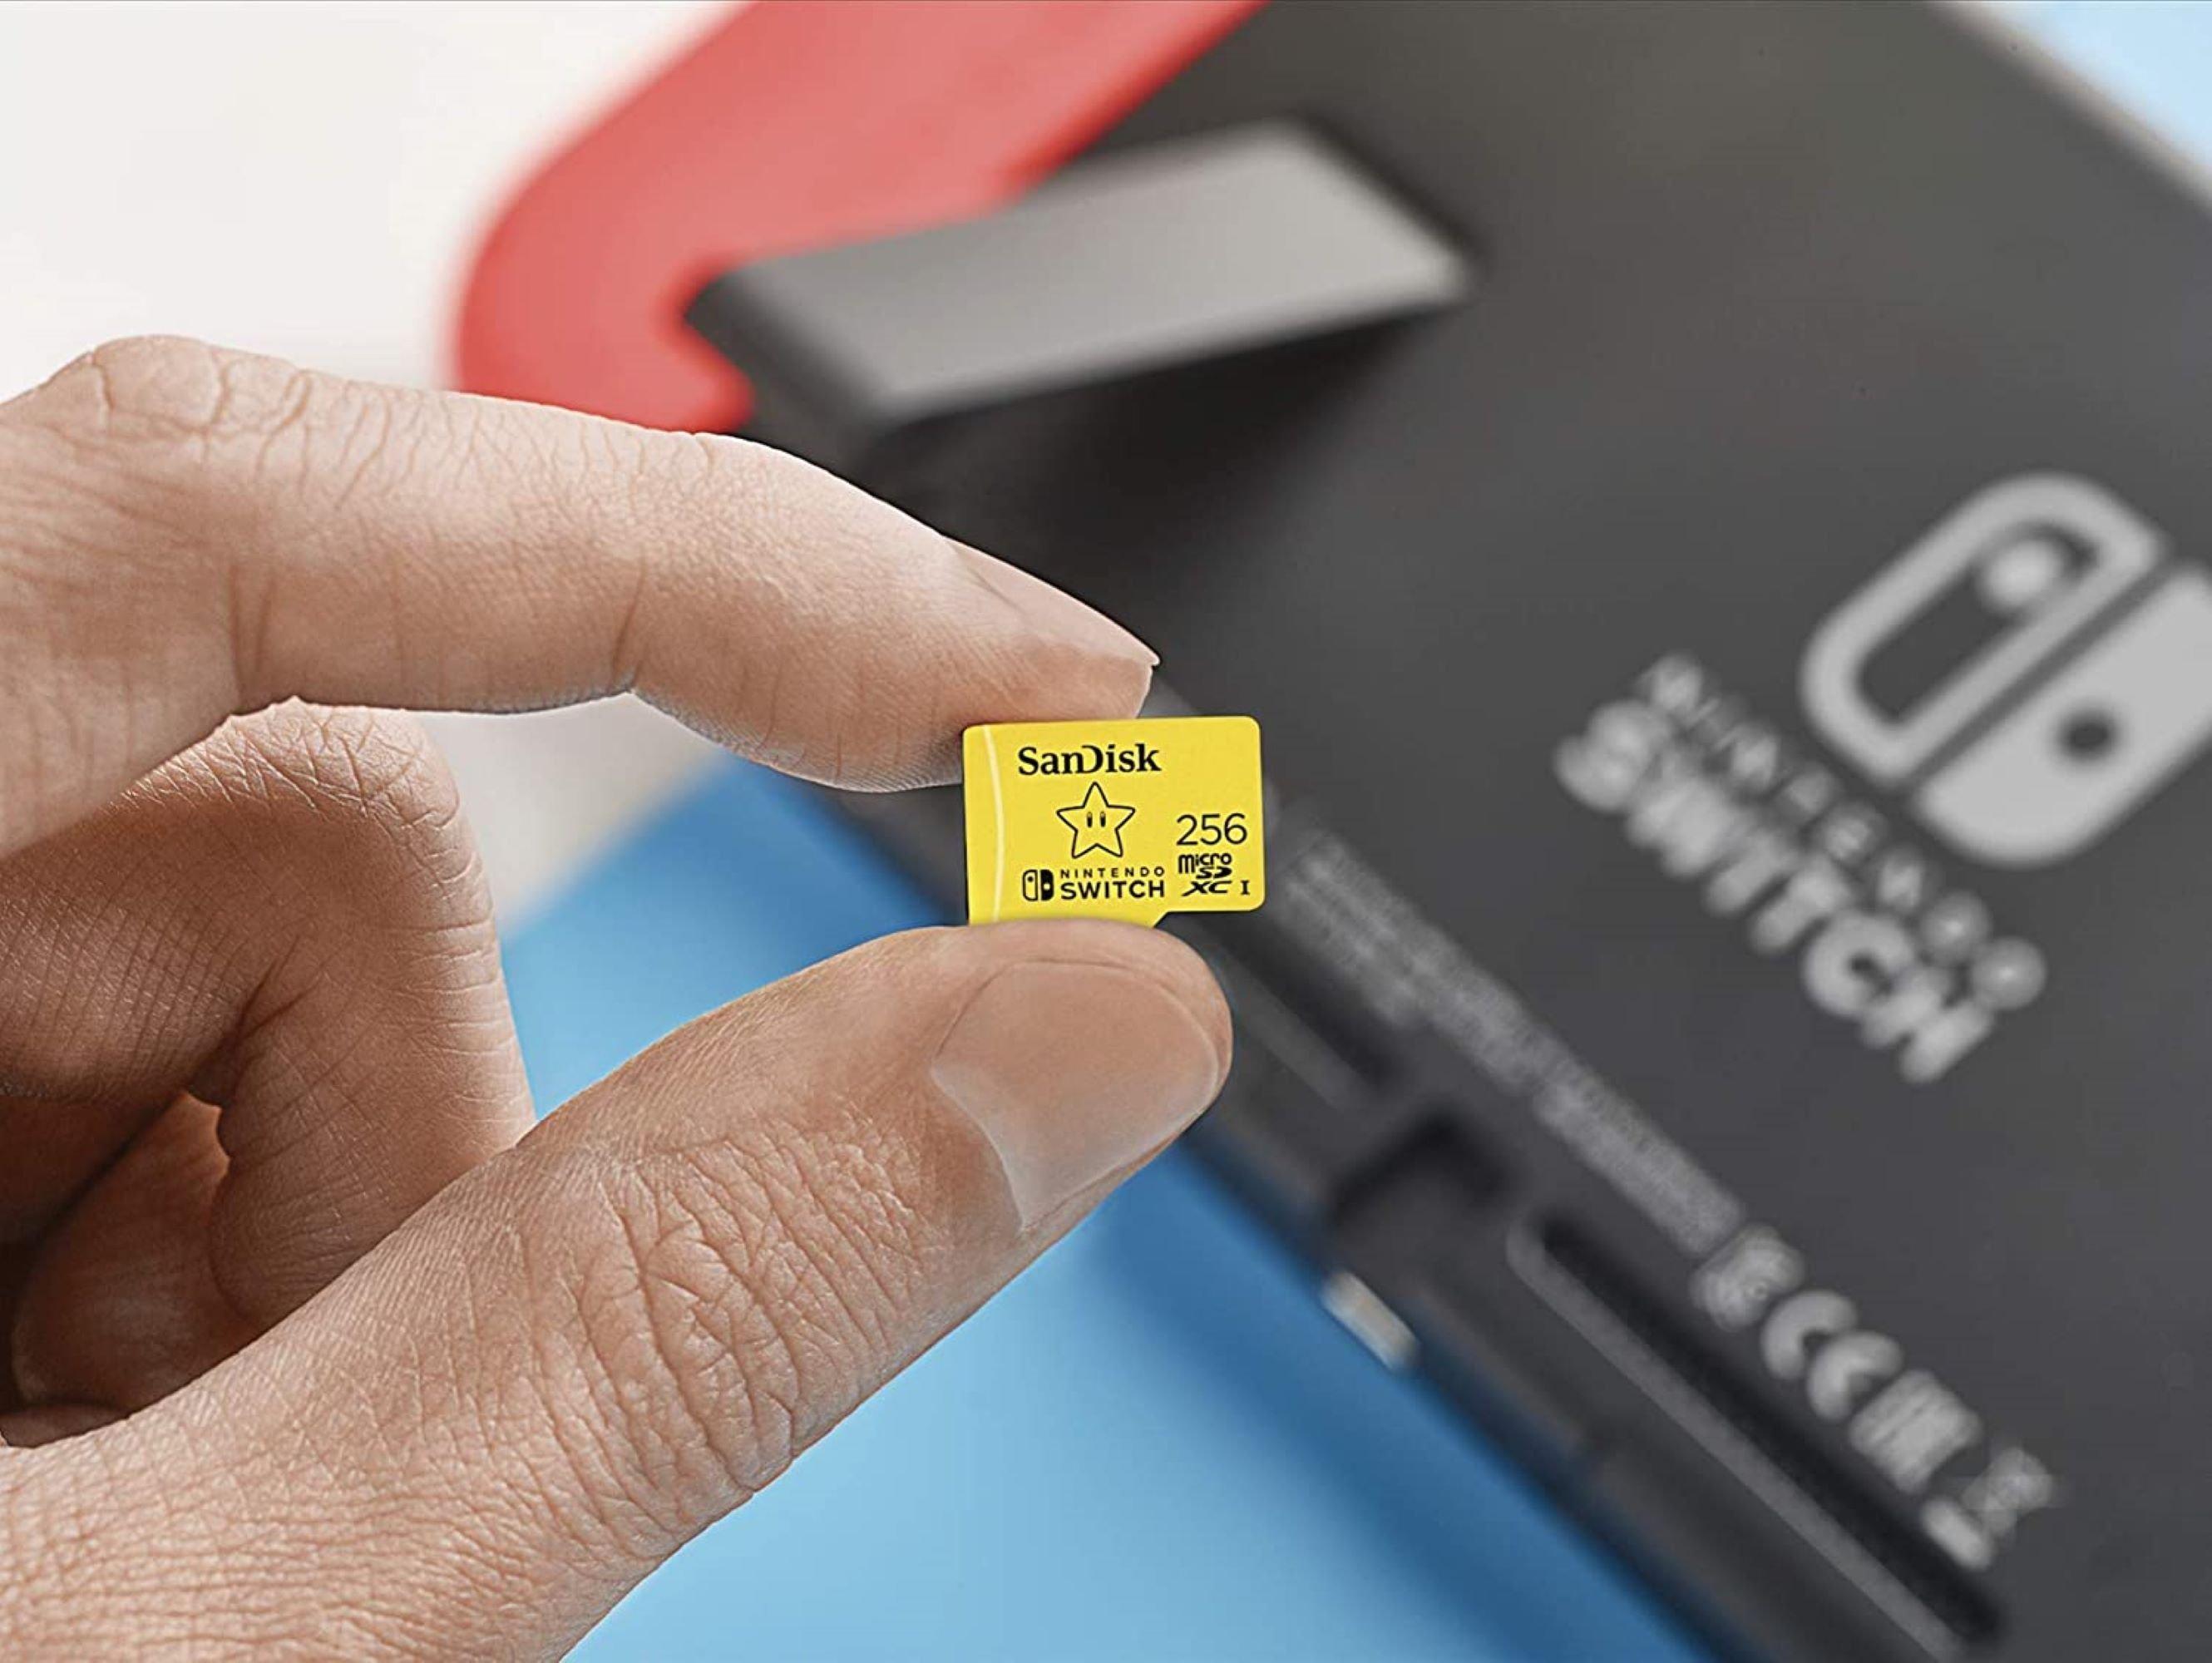 SanDisk 256GB Memory for Nintendo Switch | GameStop